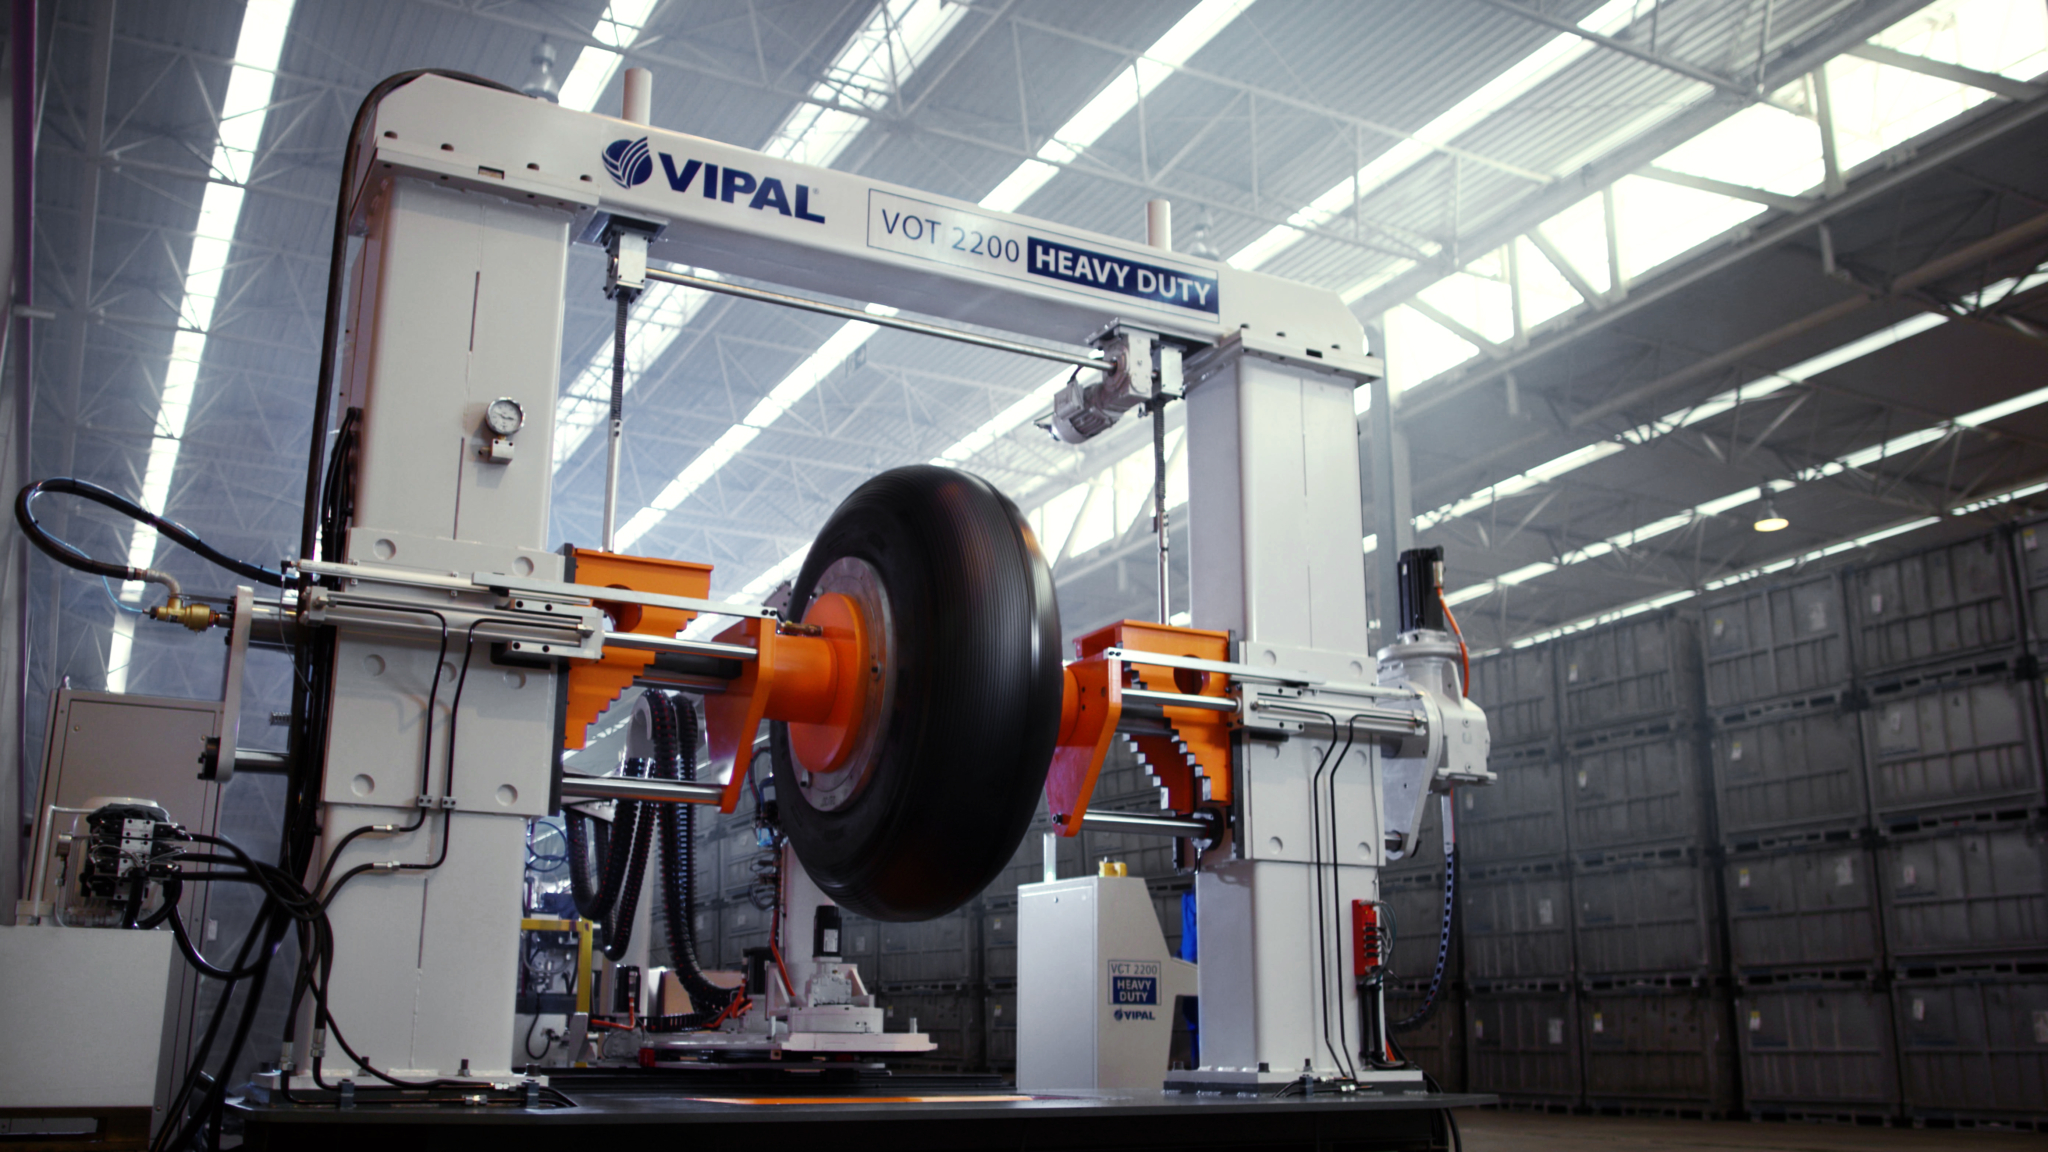 Vipal Machinery aims to expand internationally